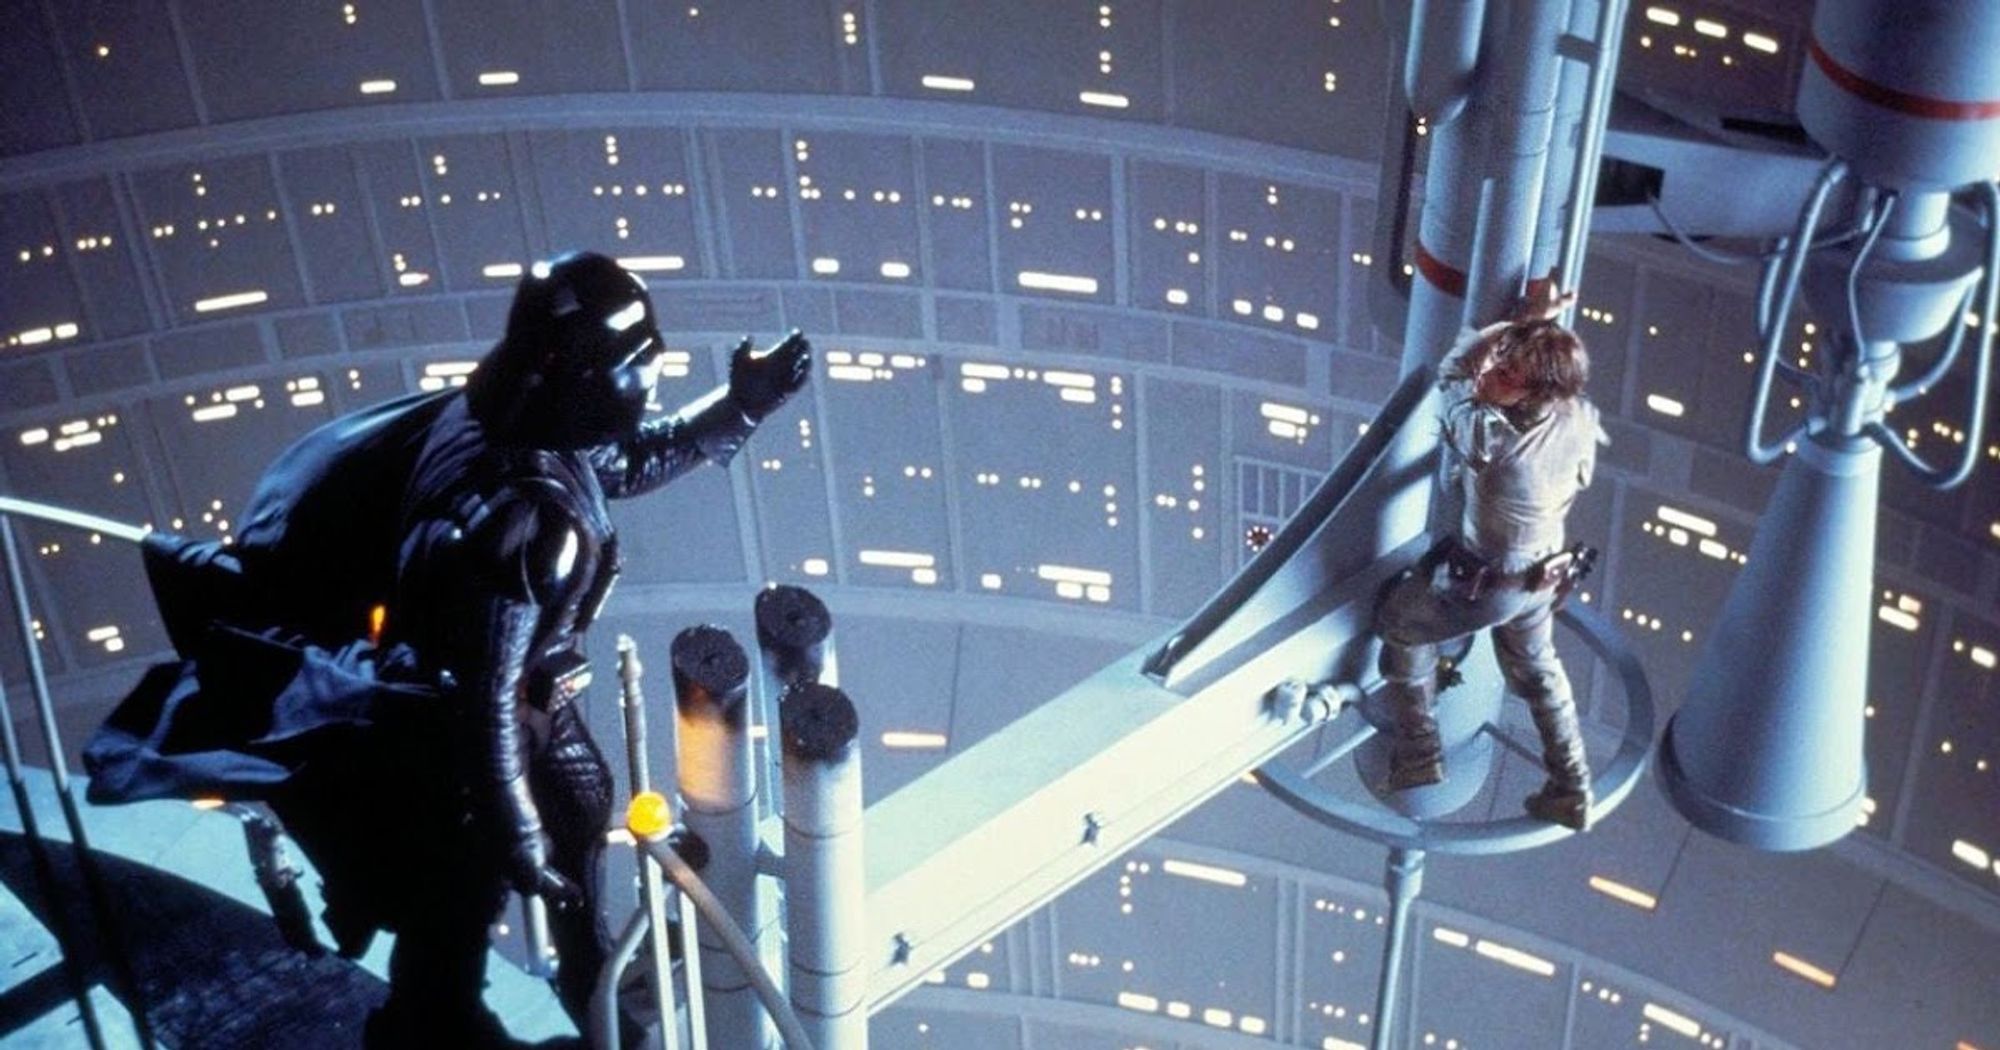 Darth Vader inviting Luke to join the dark side (Episode V: The Empire Strikes Back, 1980)